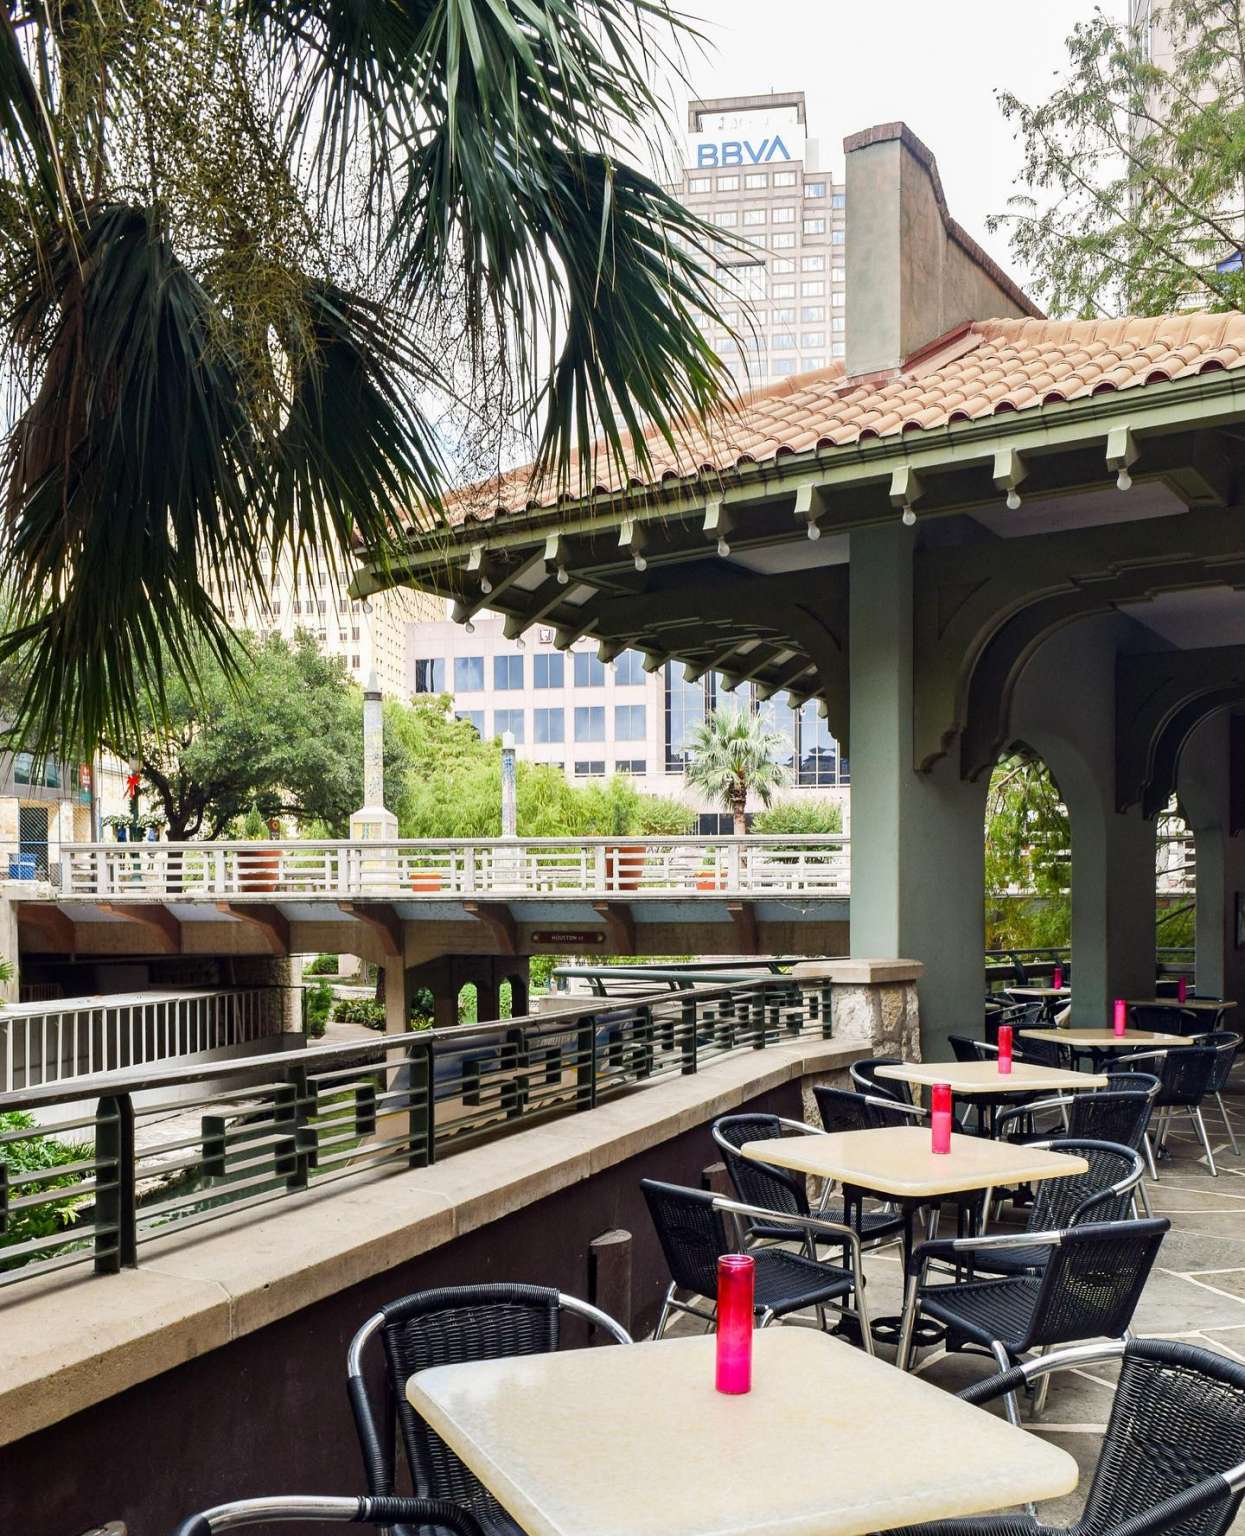 Date Ideas: 10 Restaurants to Visit on the Riverwalk in San Antonio on